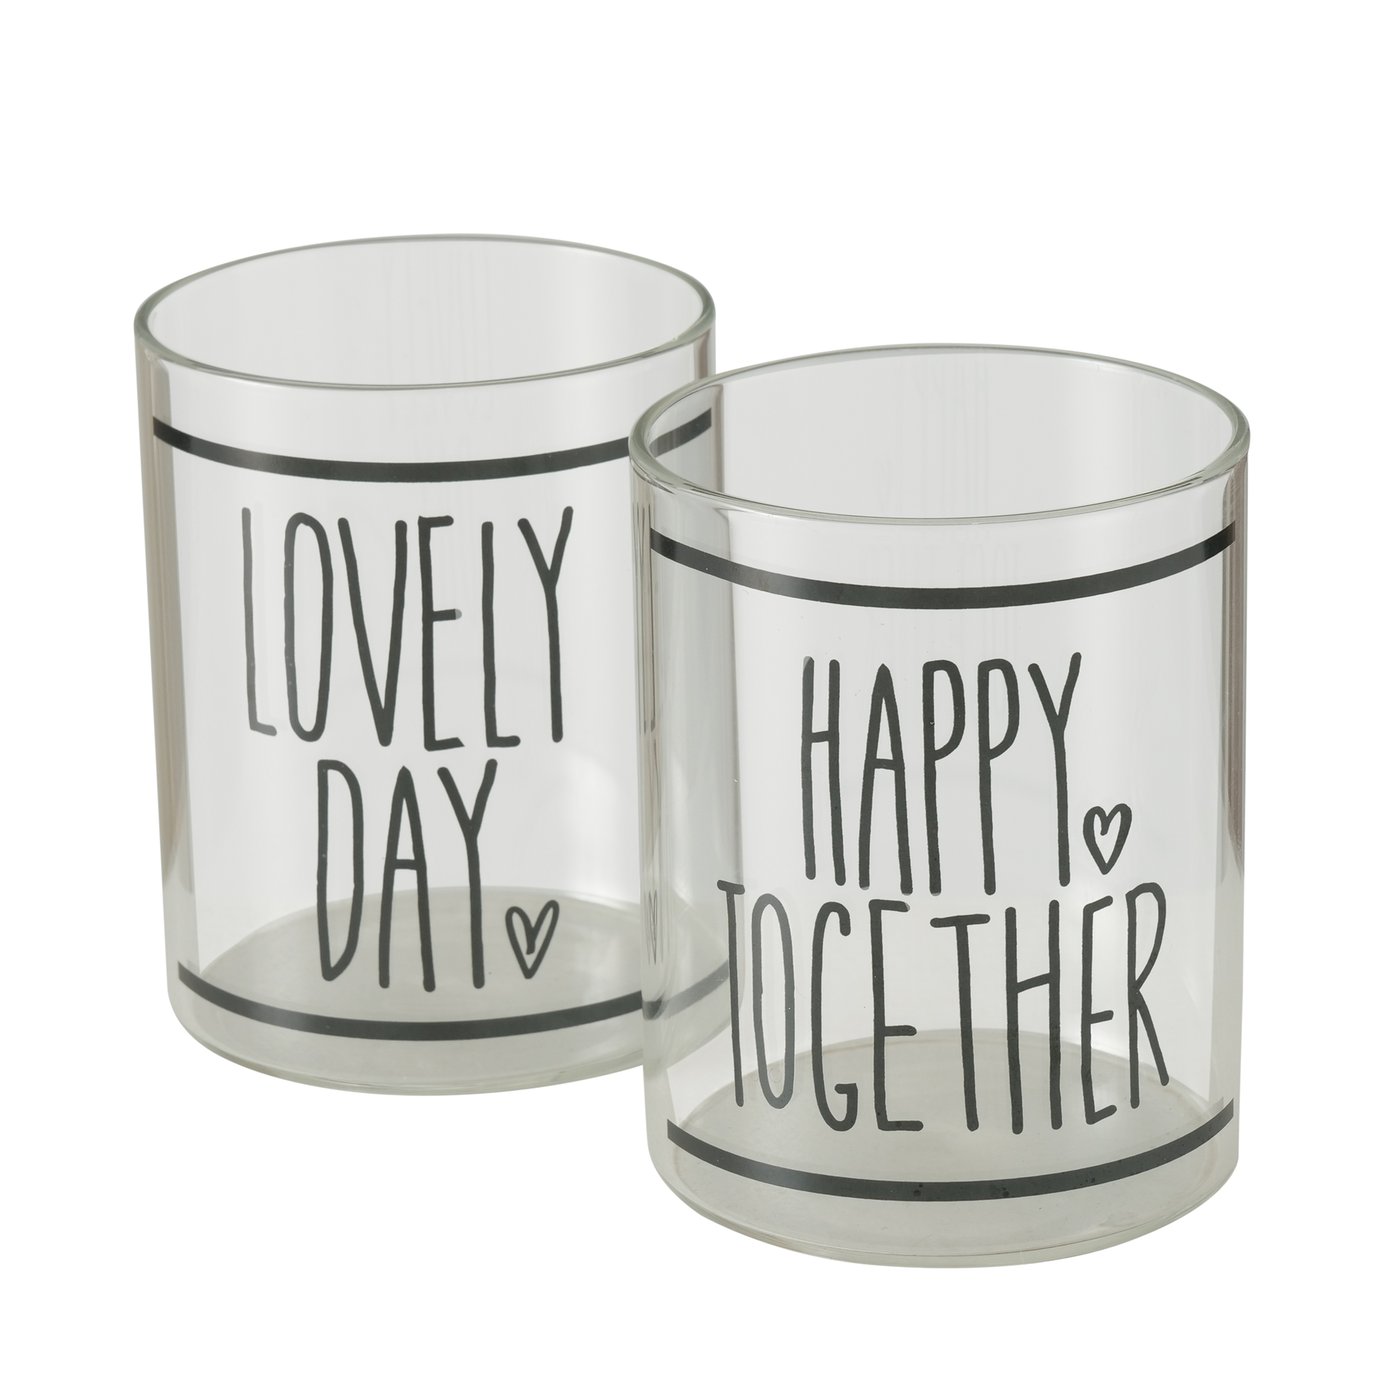 Trinkglas "Happy together"